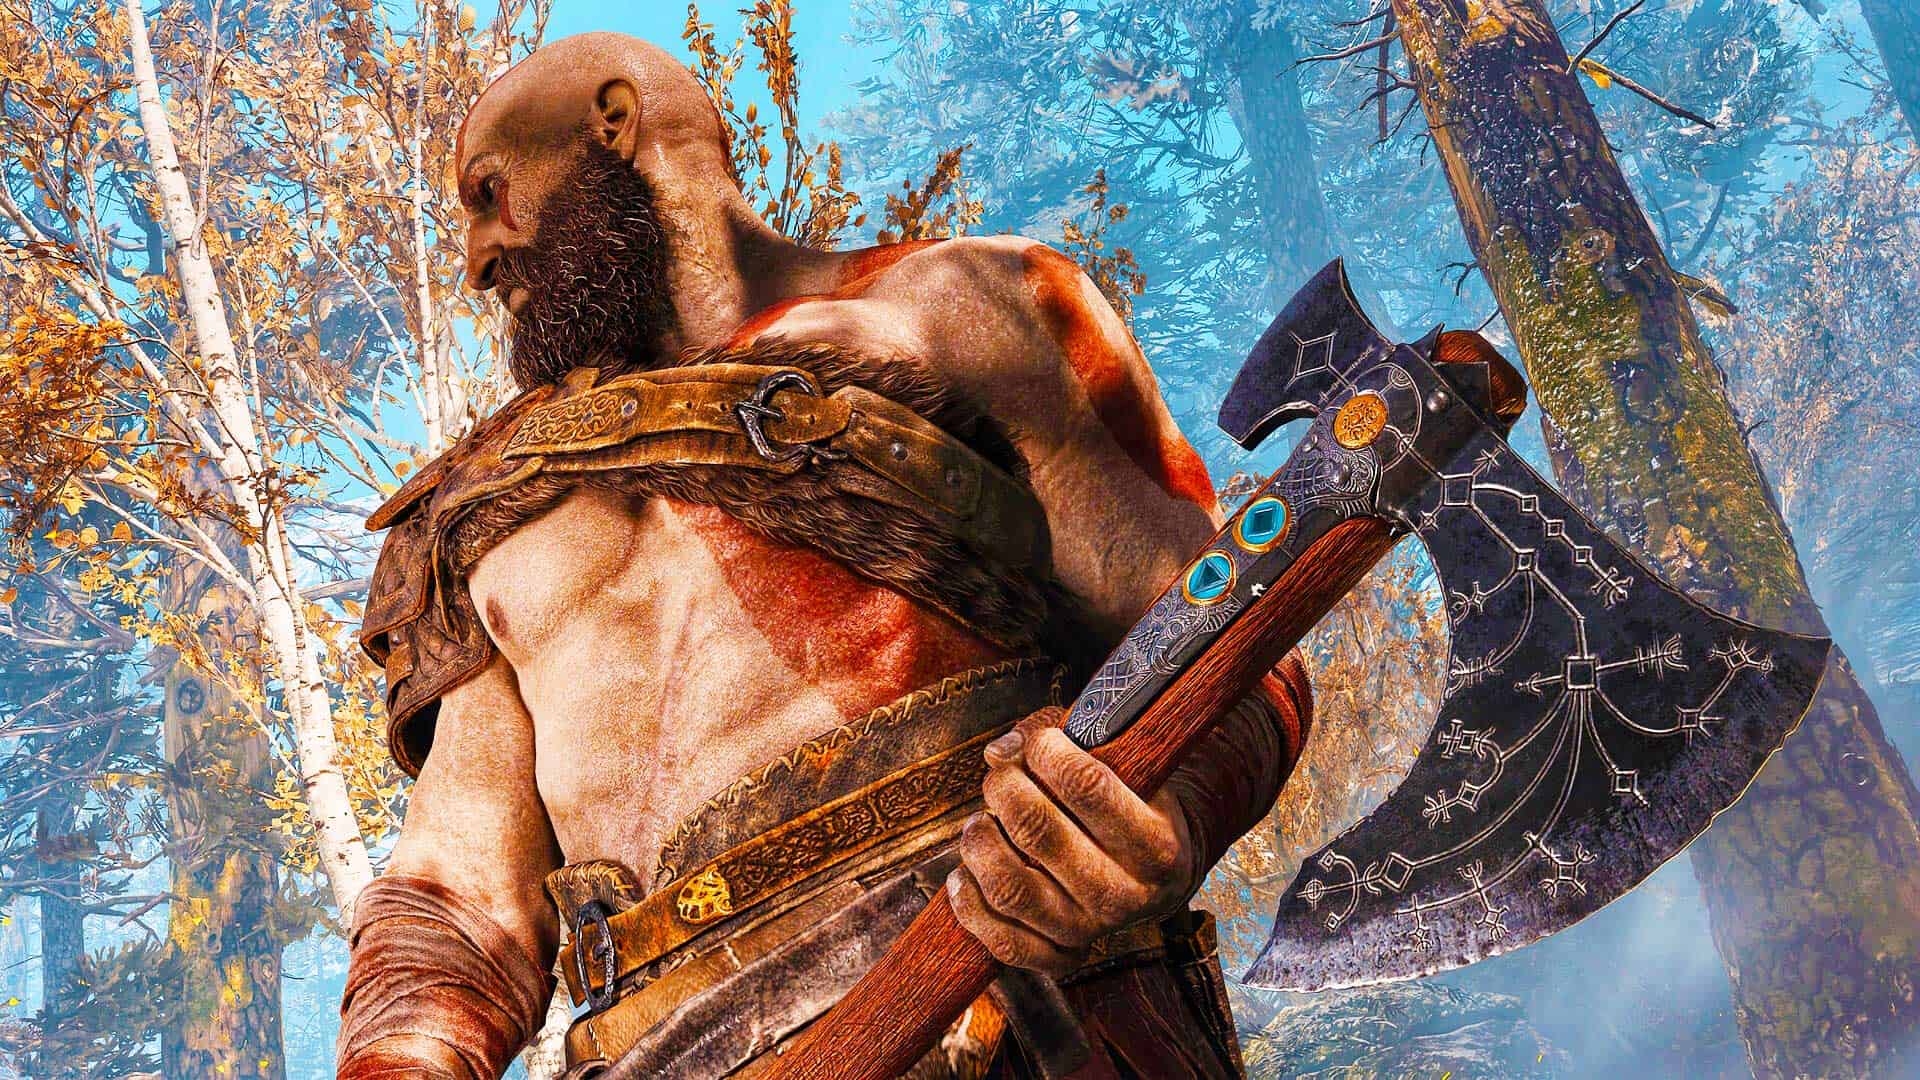 Kratos' Blade of Olympus – Brok's Forge